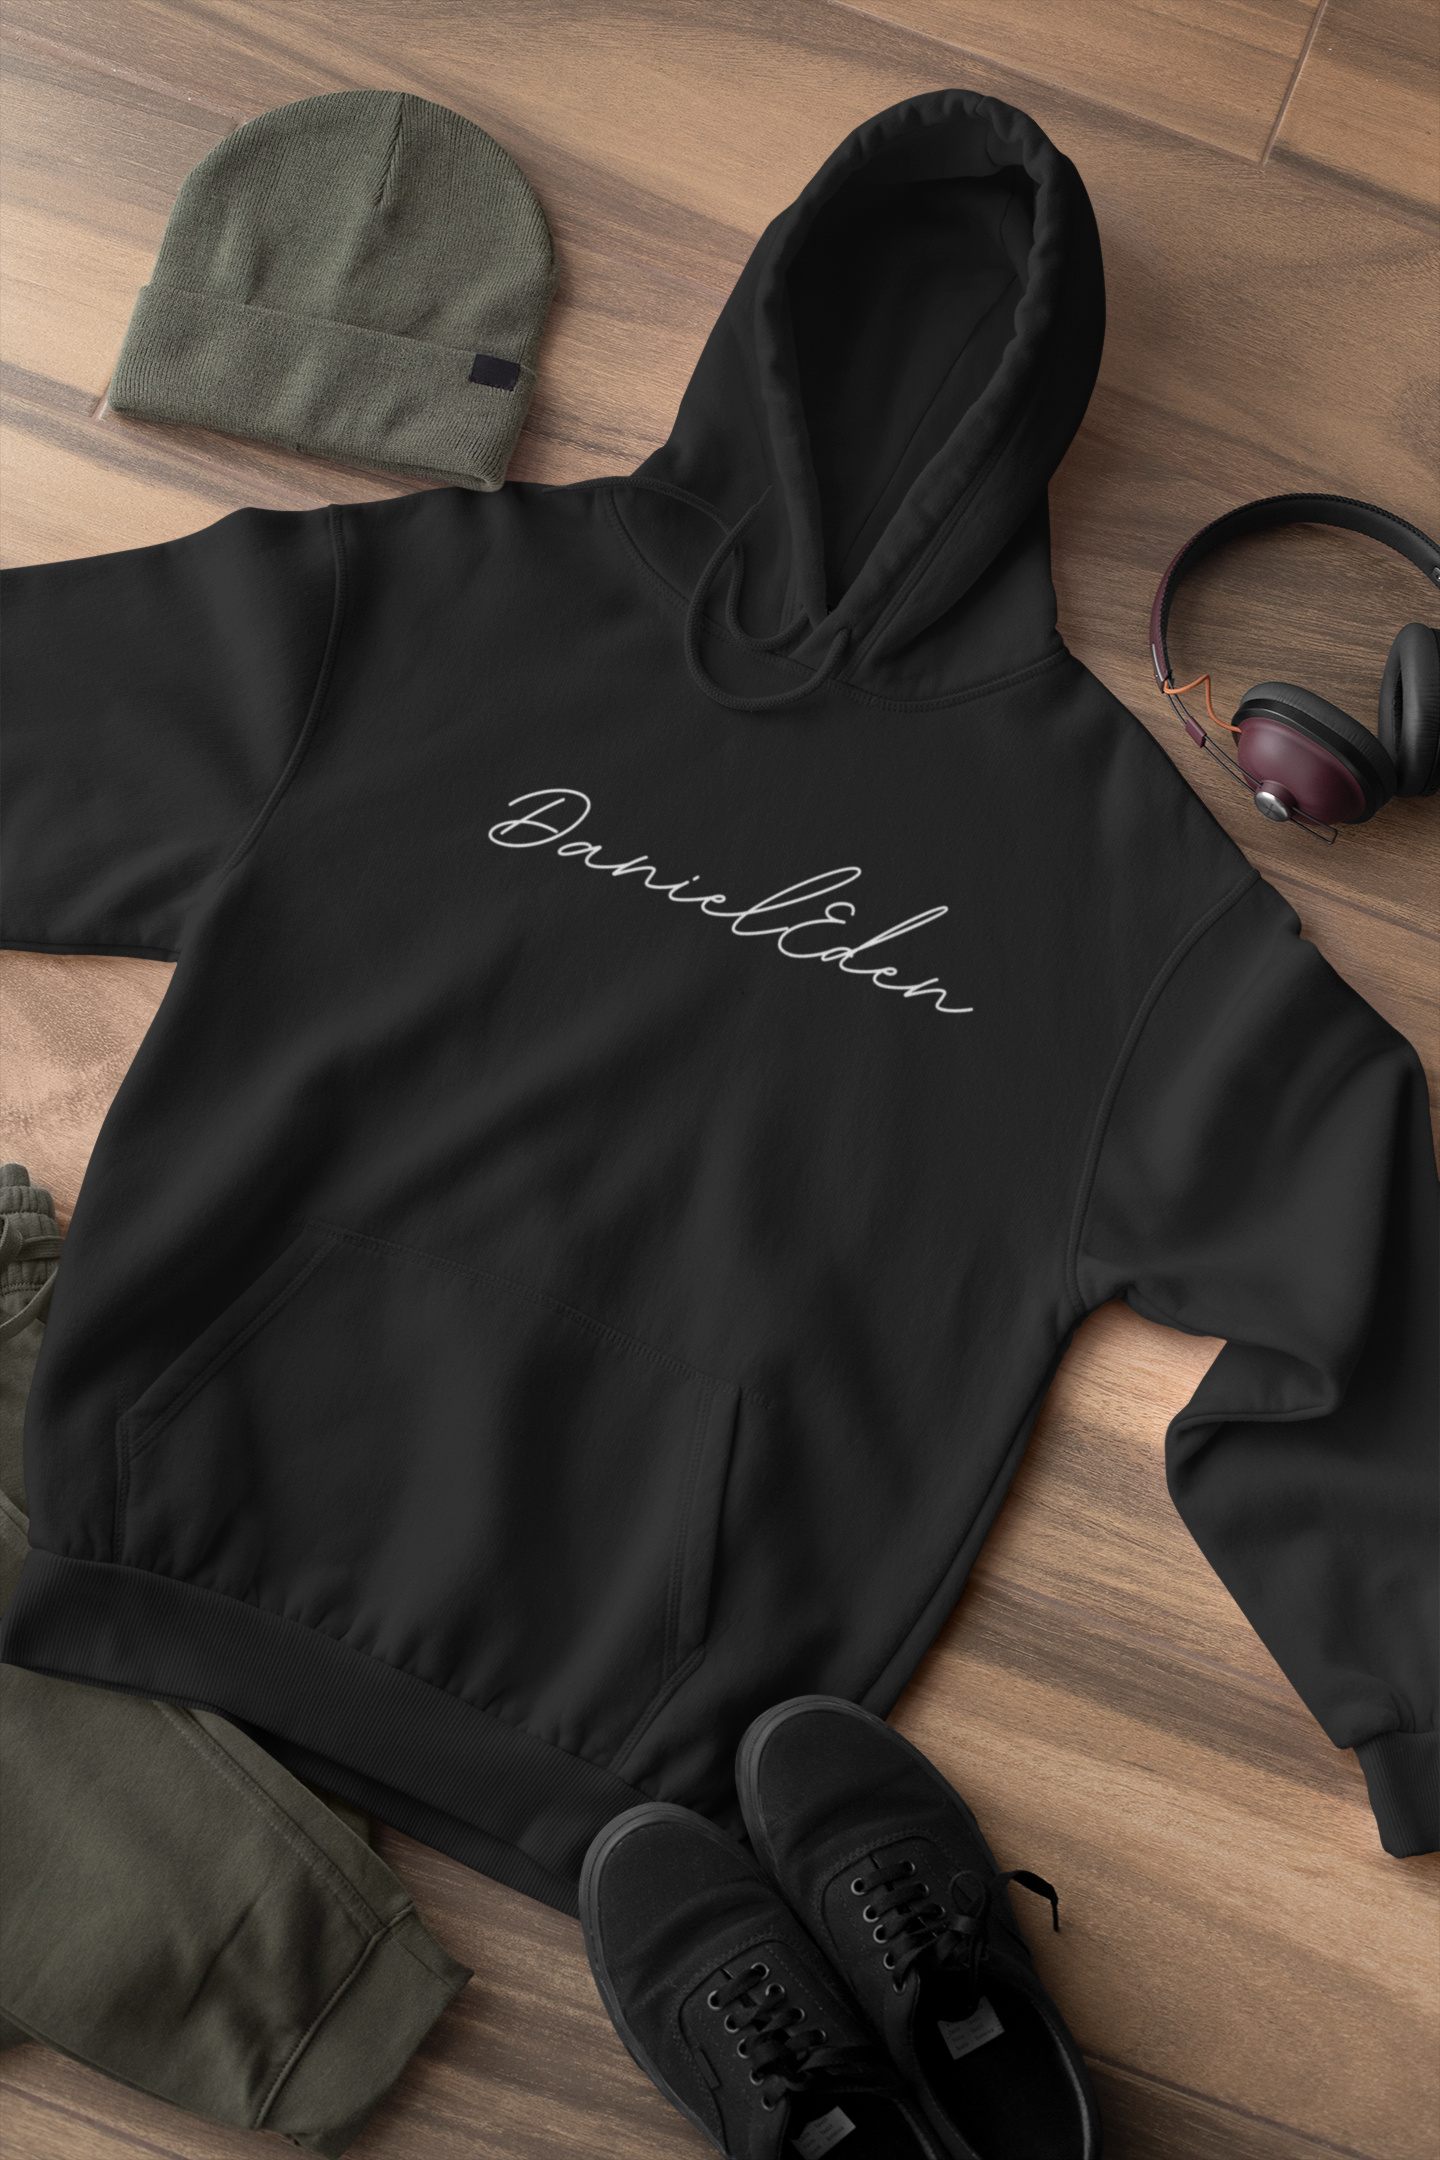 DanielEden Premium hoodie " Faith"